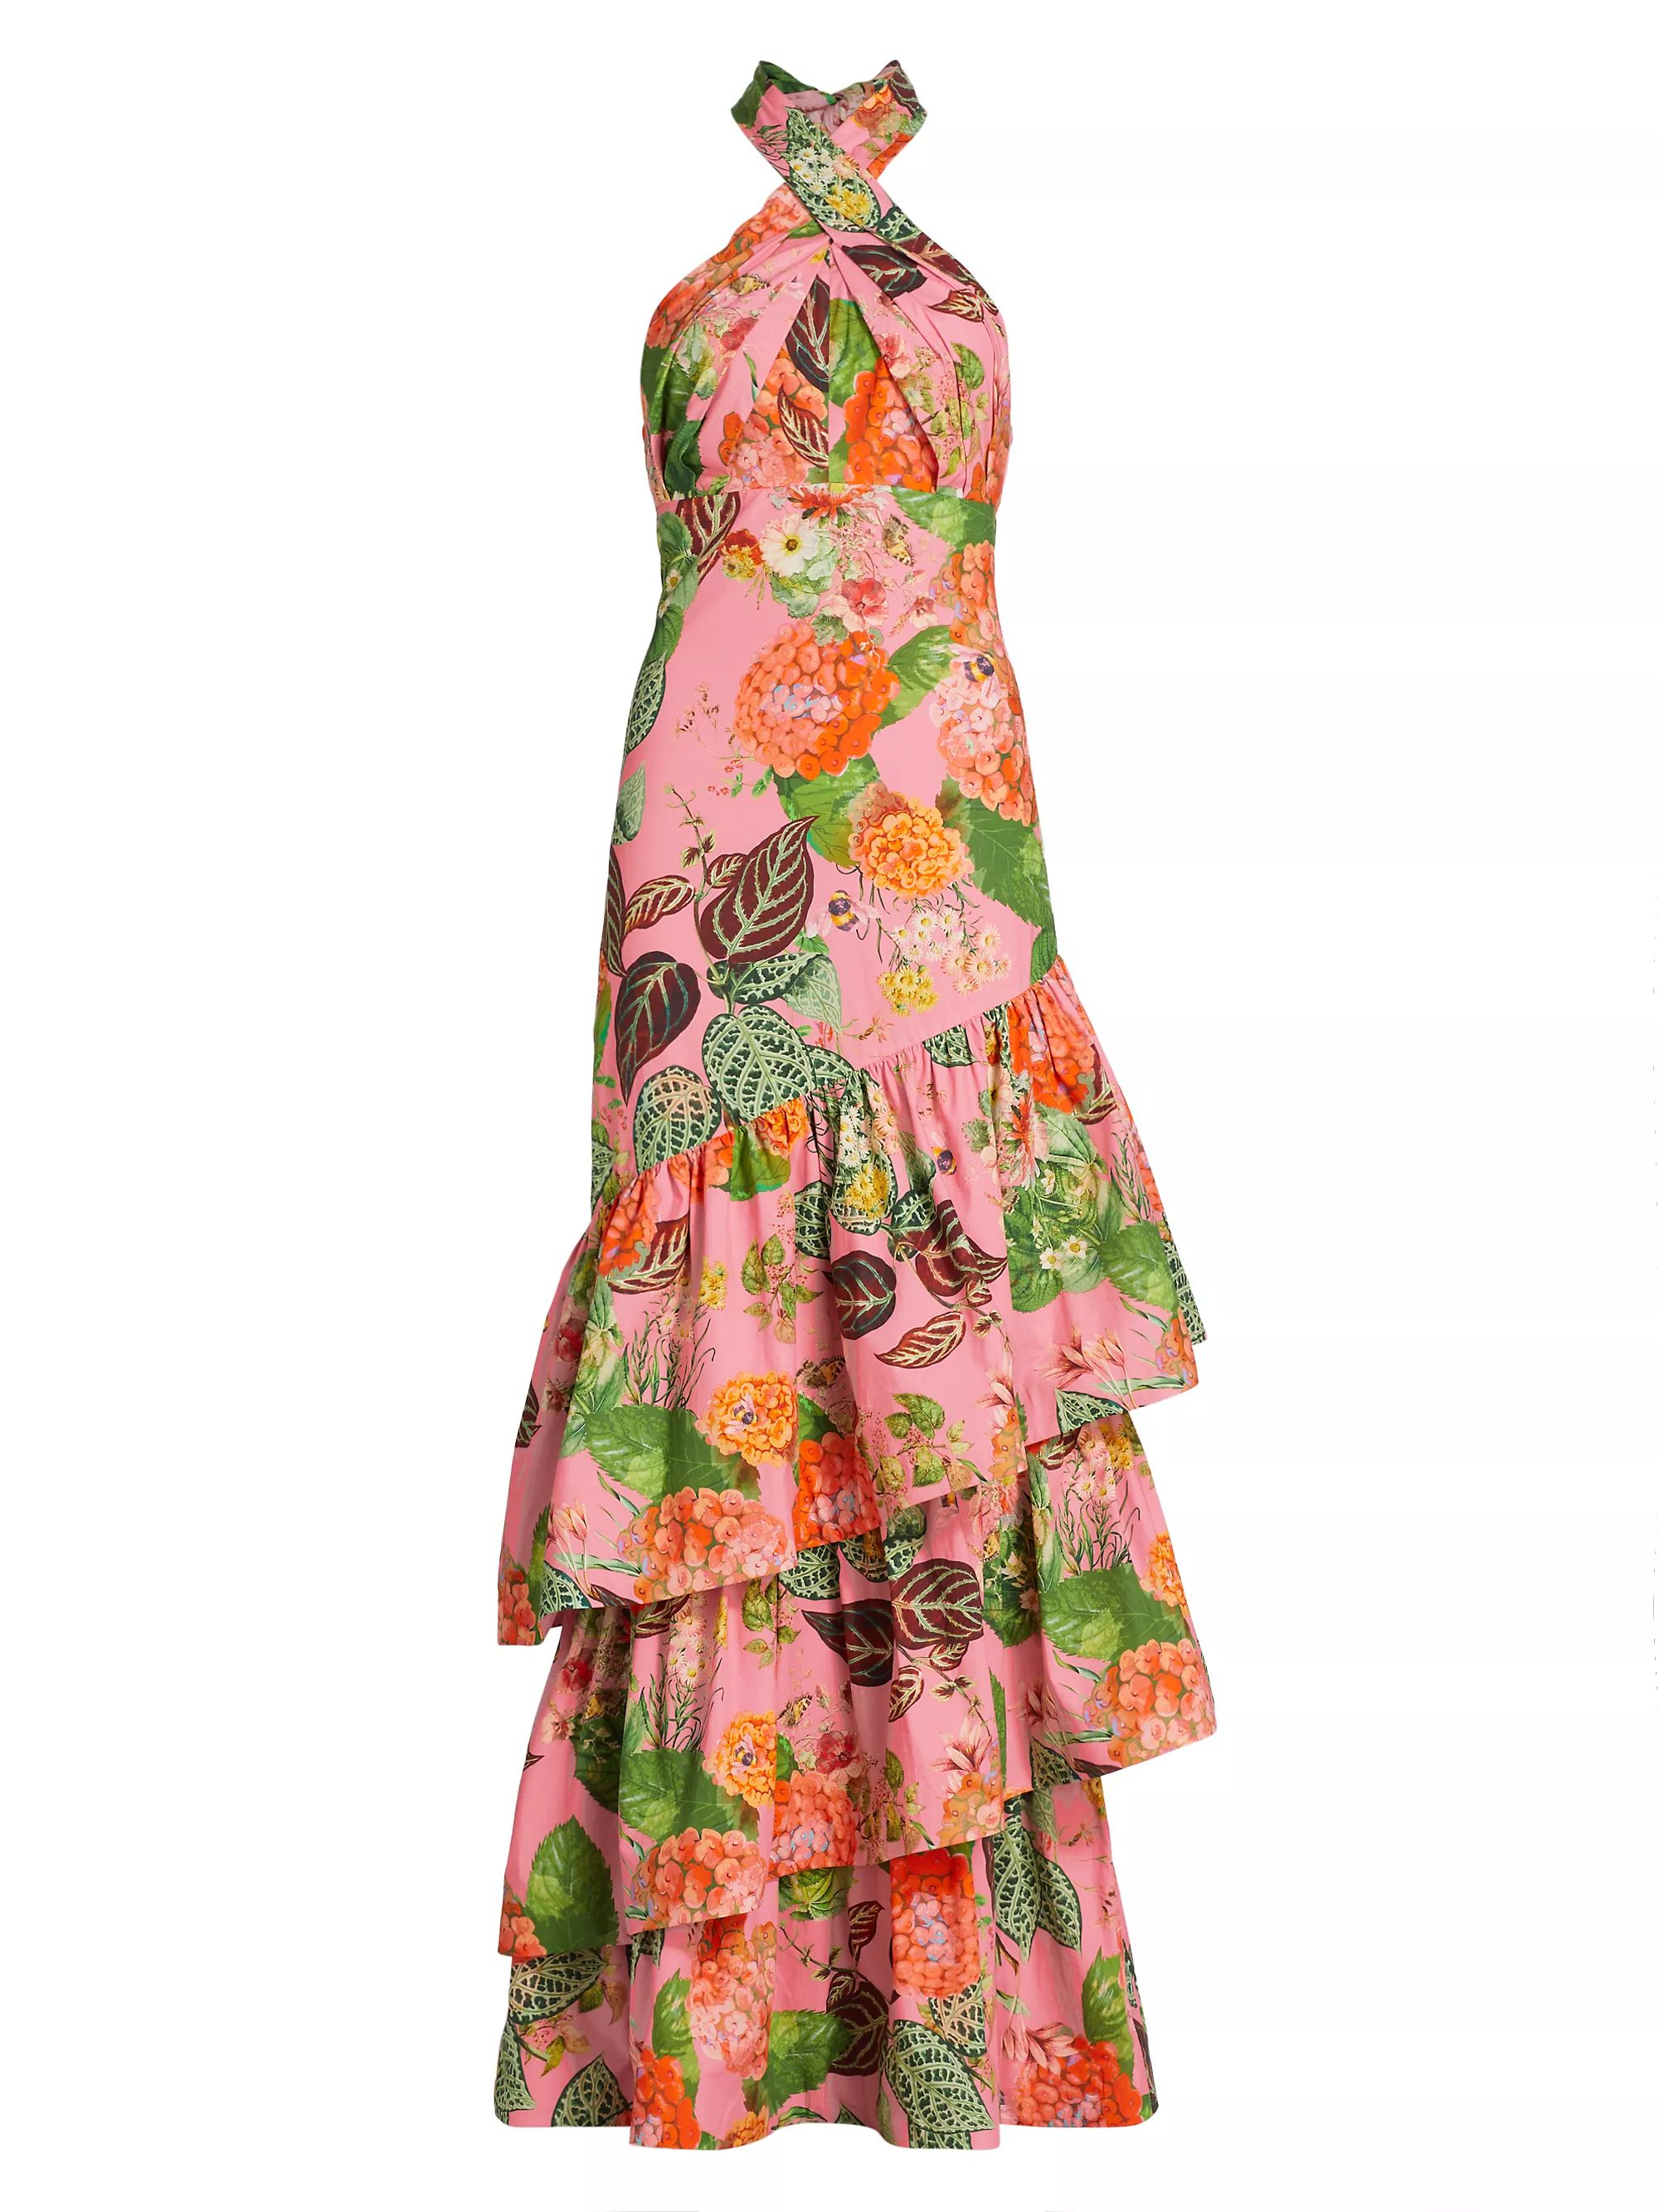 Avery Floral PinkAll MaxiCara CaraPerla Floral Ruffled Halter Dress$895SELECT SIZE Free Shipping... | Saks Fifth Avenue